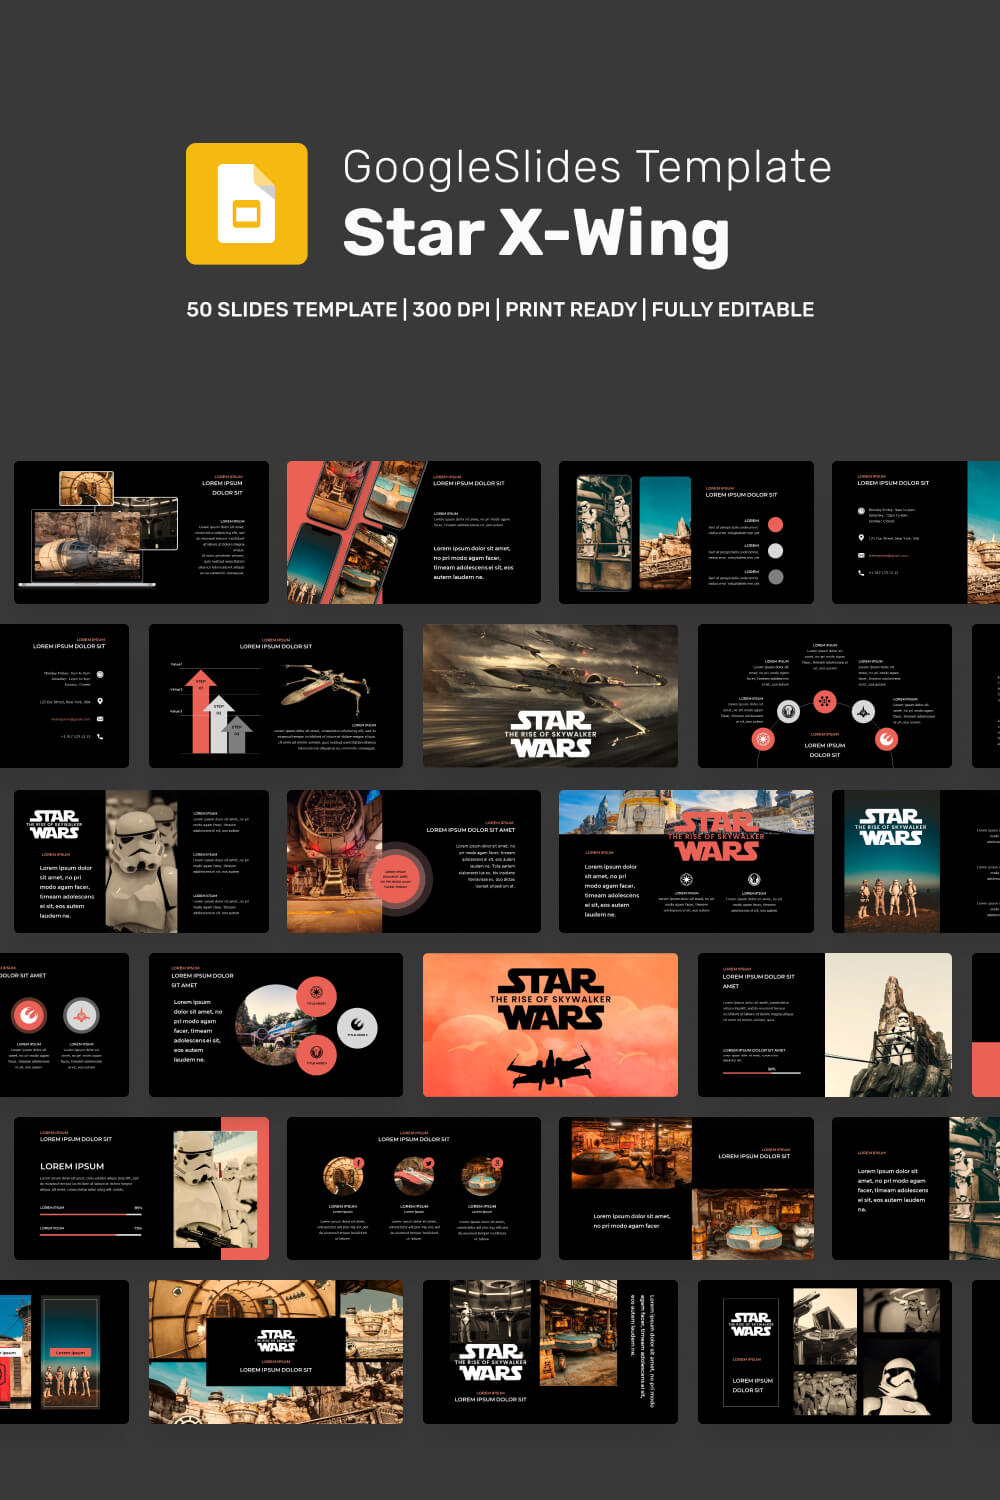 XWing Star Wars Google Slides Theme pinterest.